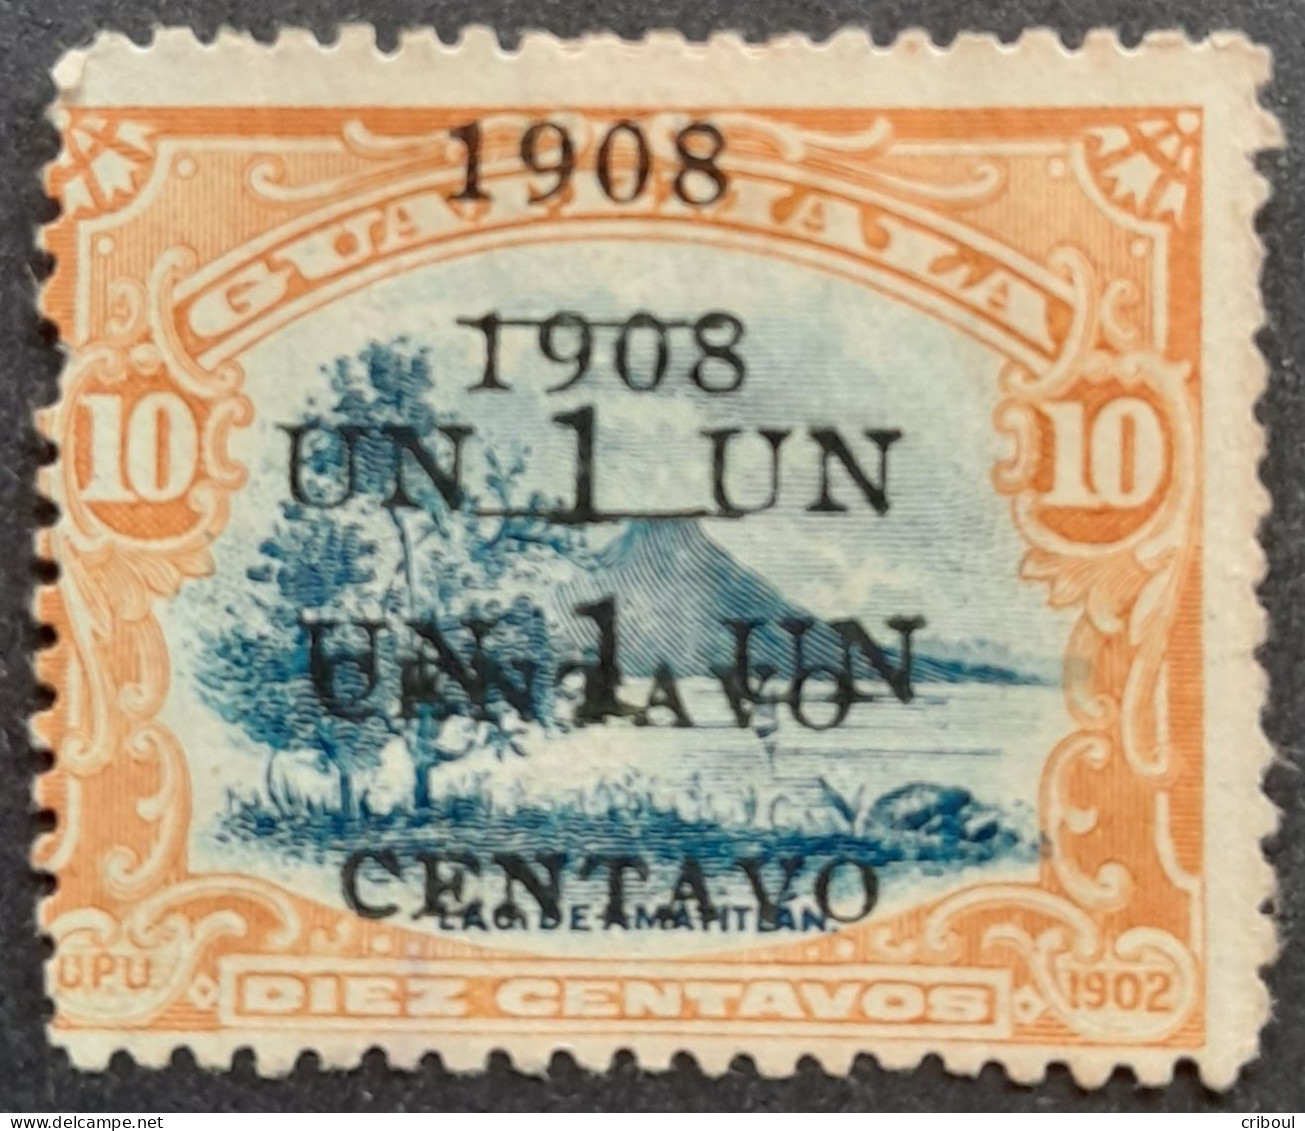 Guatemala 1908 Lac Lake Amatitlan Double Surcharge Overprint UN CENTAVO Yvert 138a (*) MNG - Fehldrucke